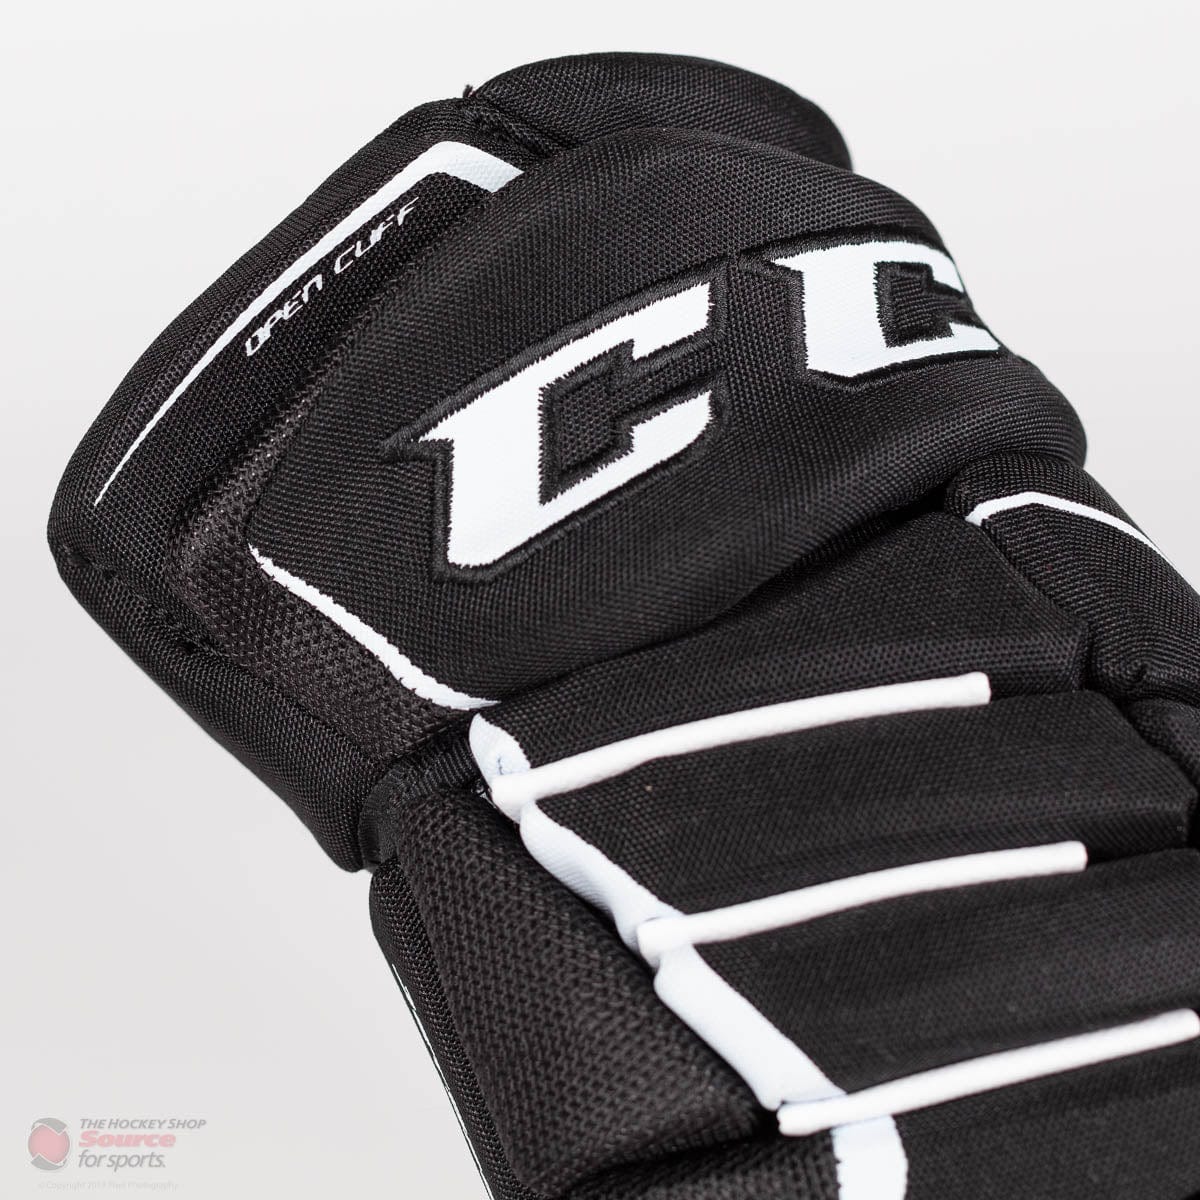 CCM Jetspeed Control Junior Hockey Gloves (2019)